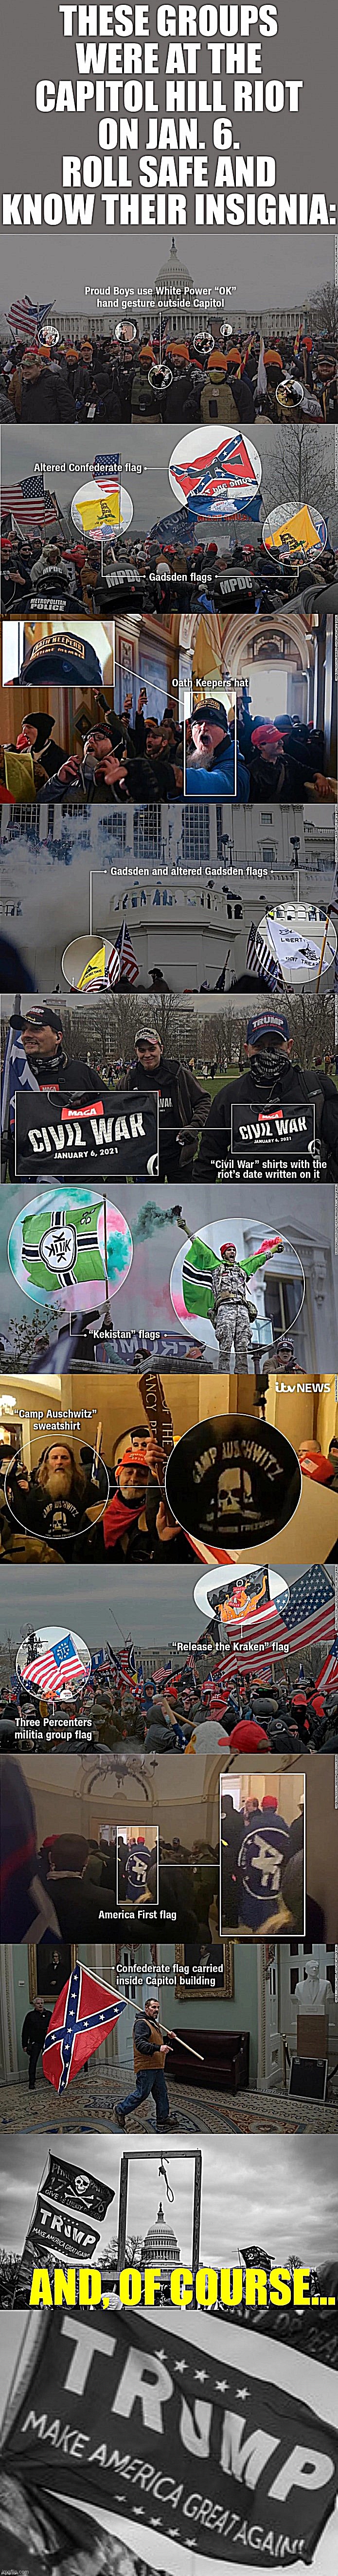 MAGA riot insignia. | image tagged in capitol hill riot groups insignia,capitol hill,riots | made w/ Imgflip meme maker